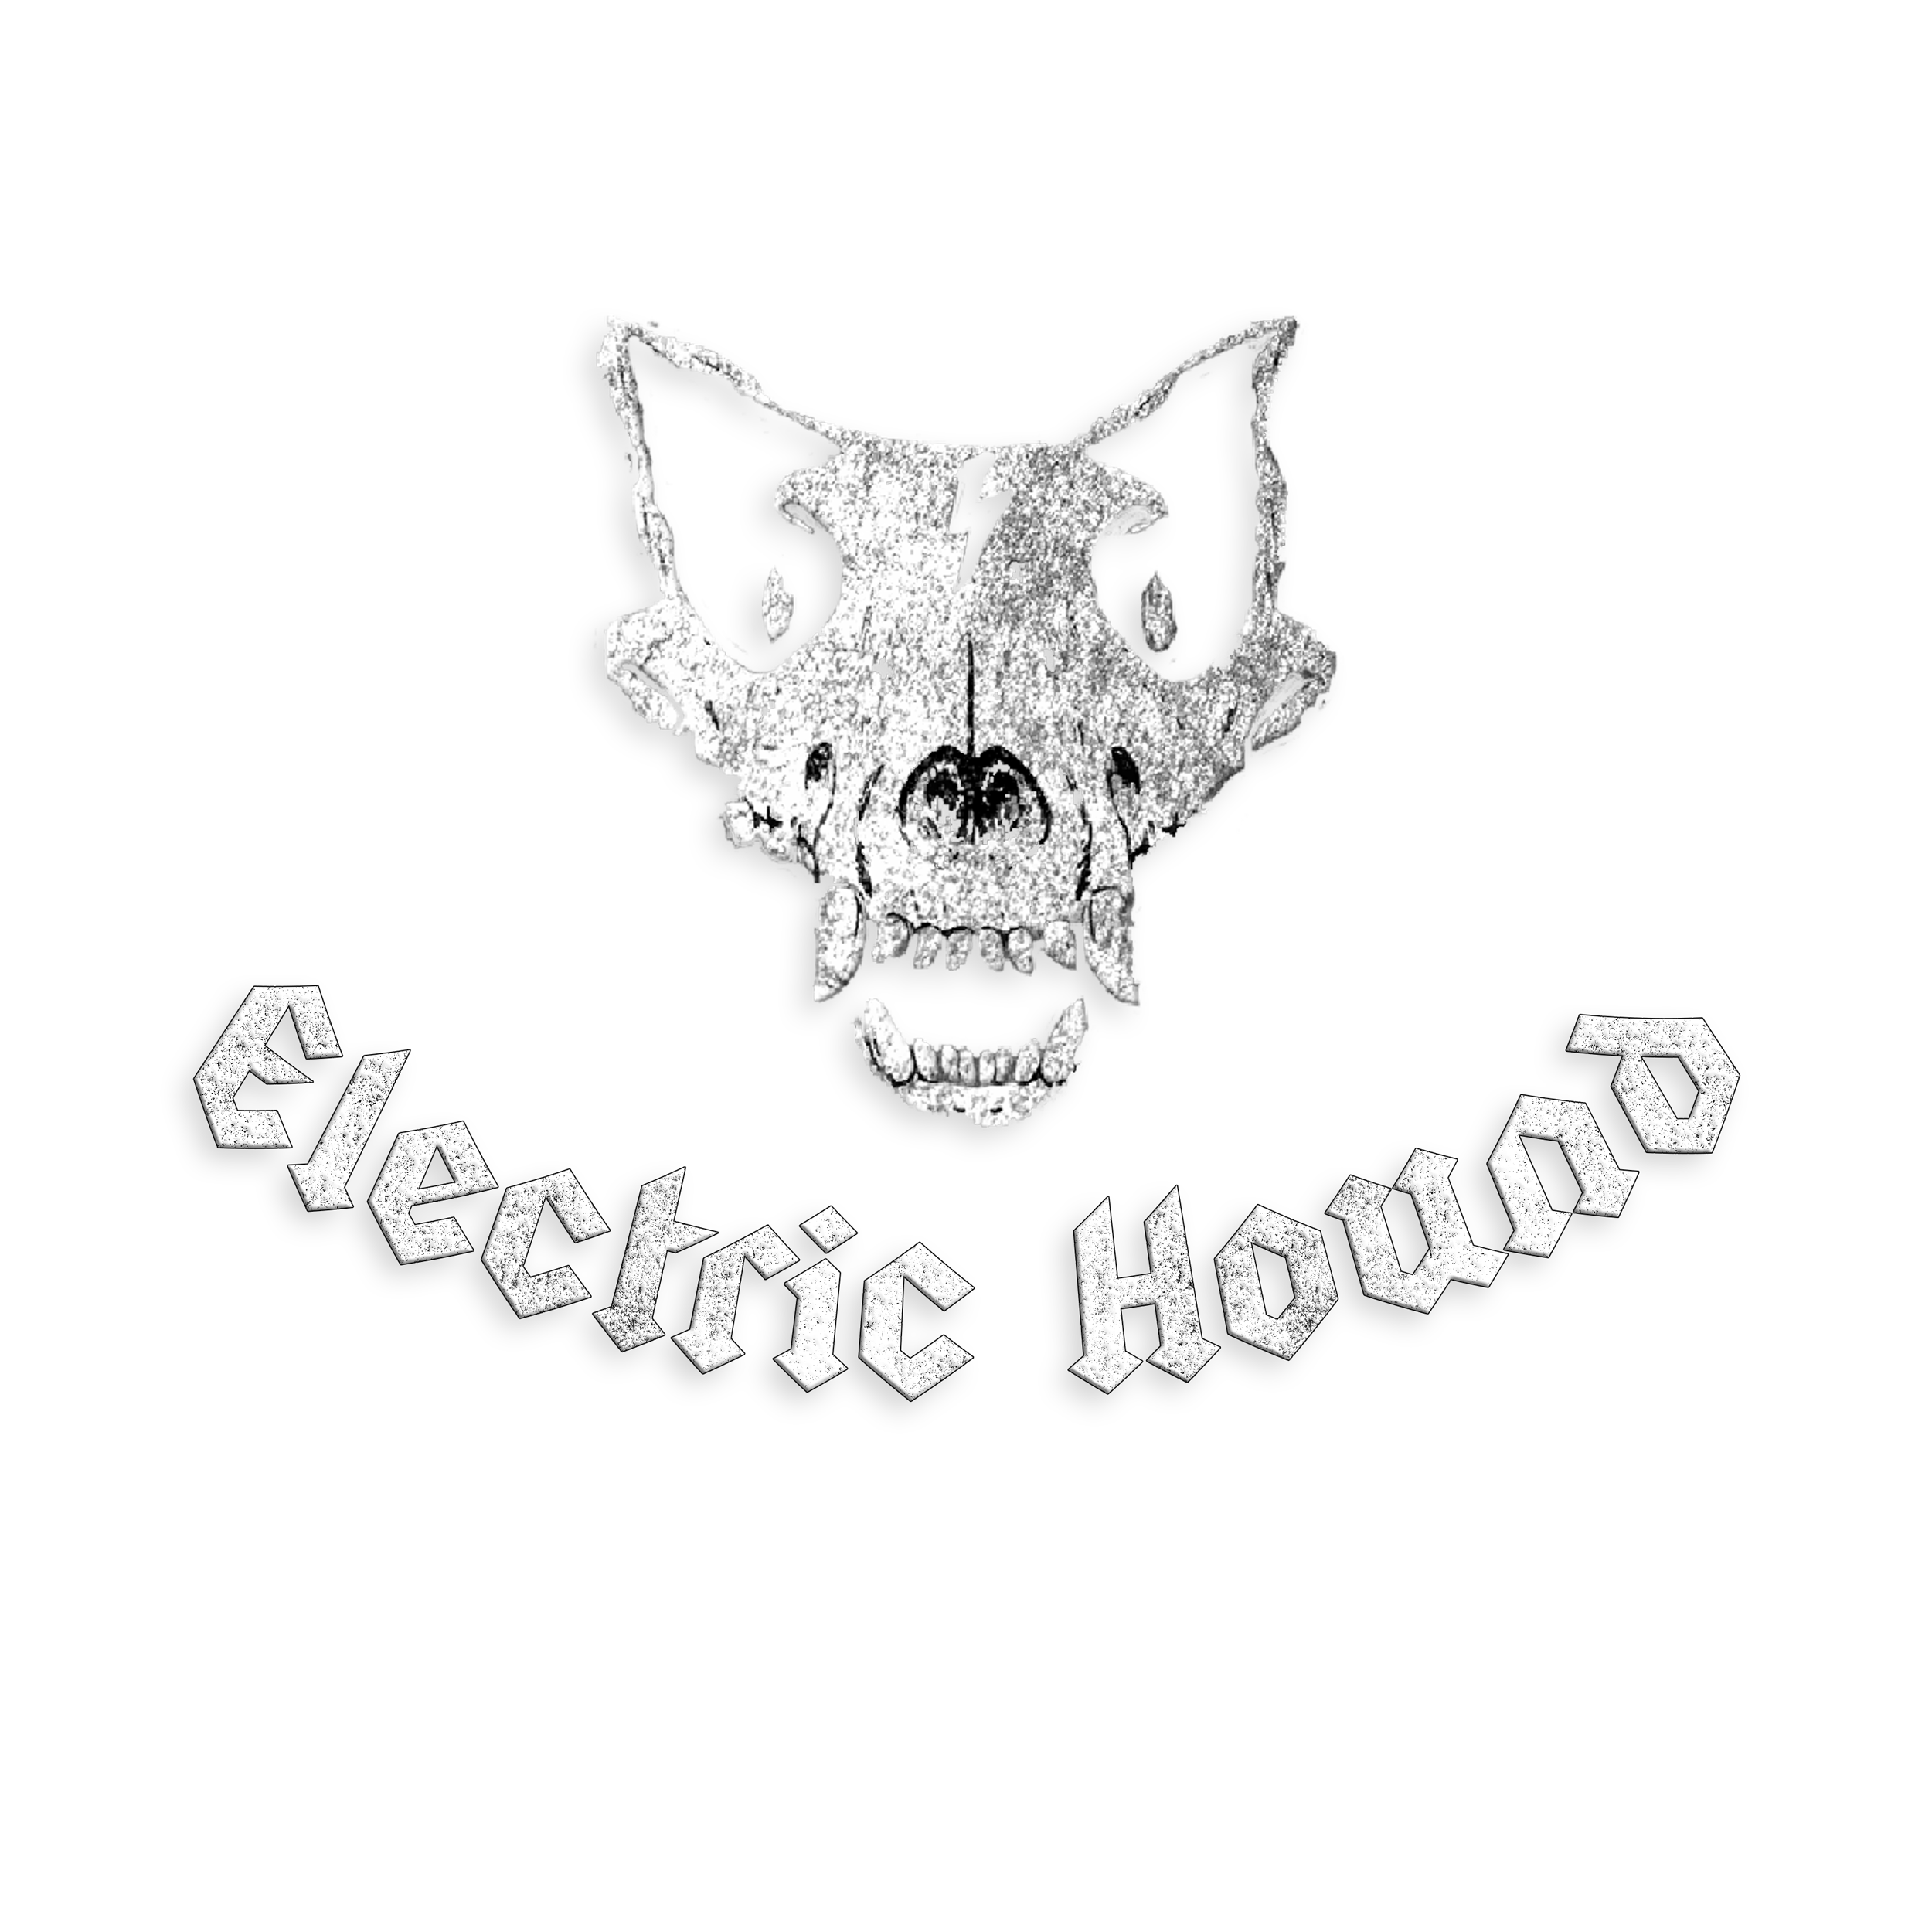 Electric Hound